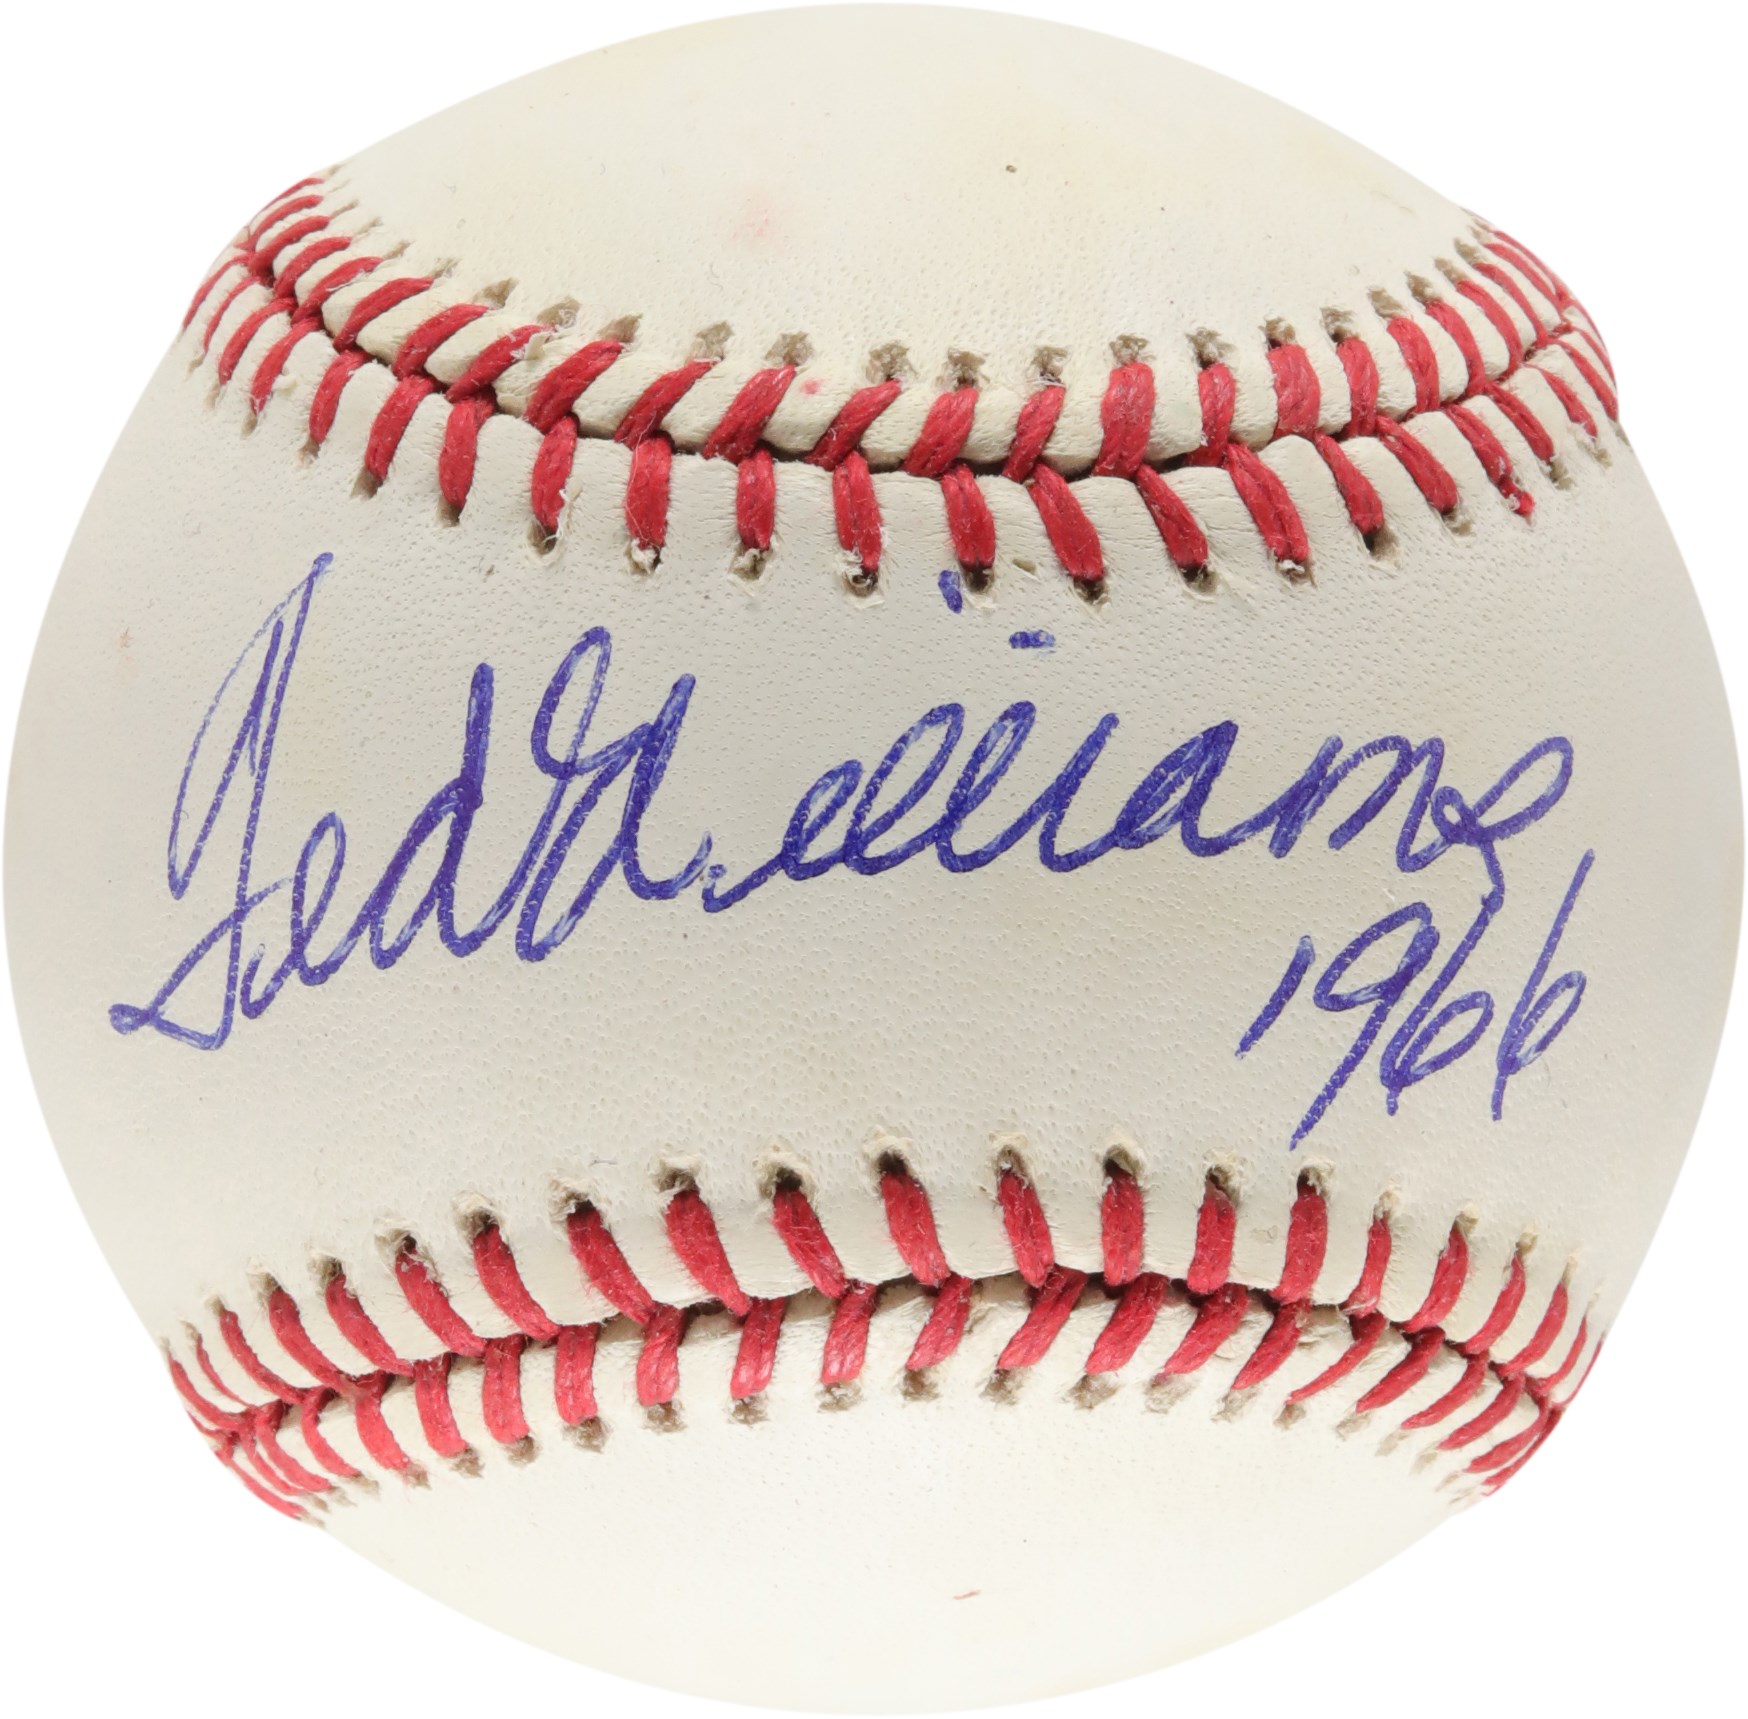 Baseball Autographs - ed Williams "1966" Hall of Fame Induction Year Single Signed Baseball (JSA)